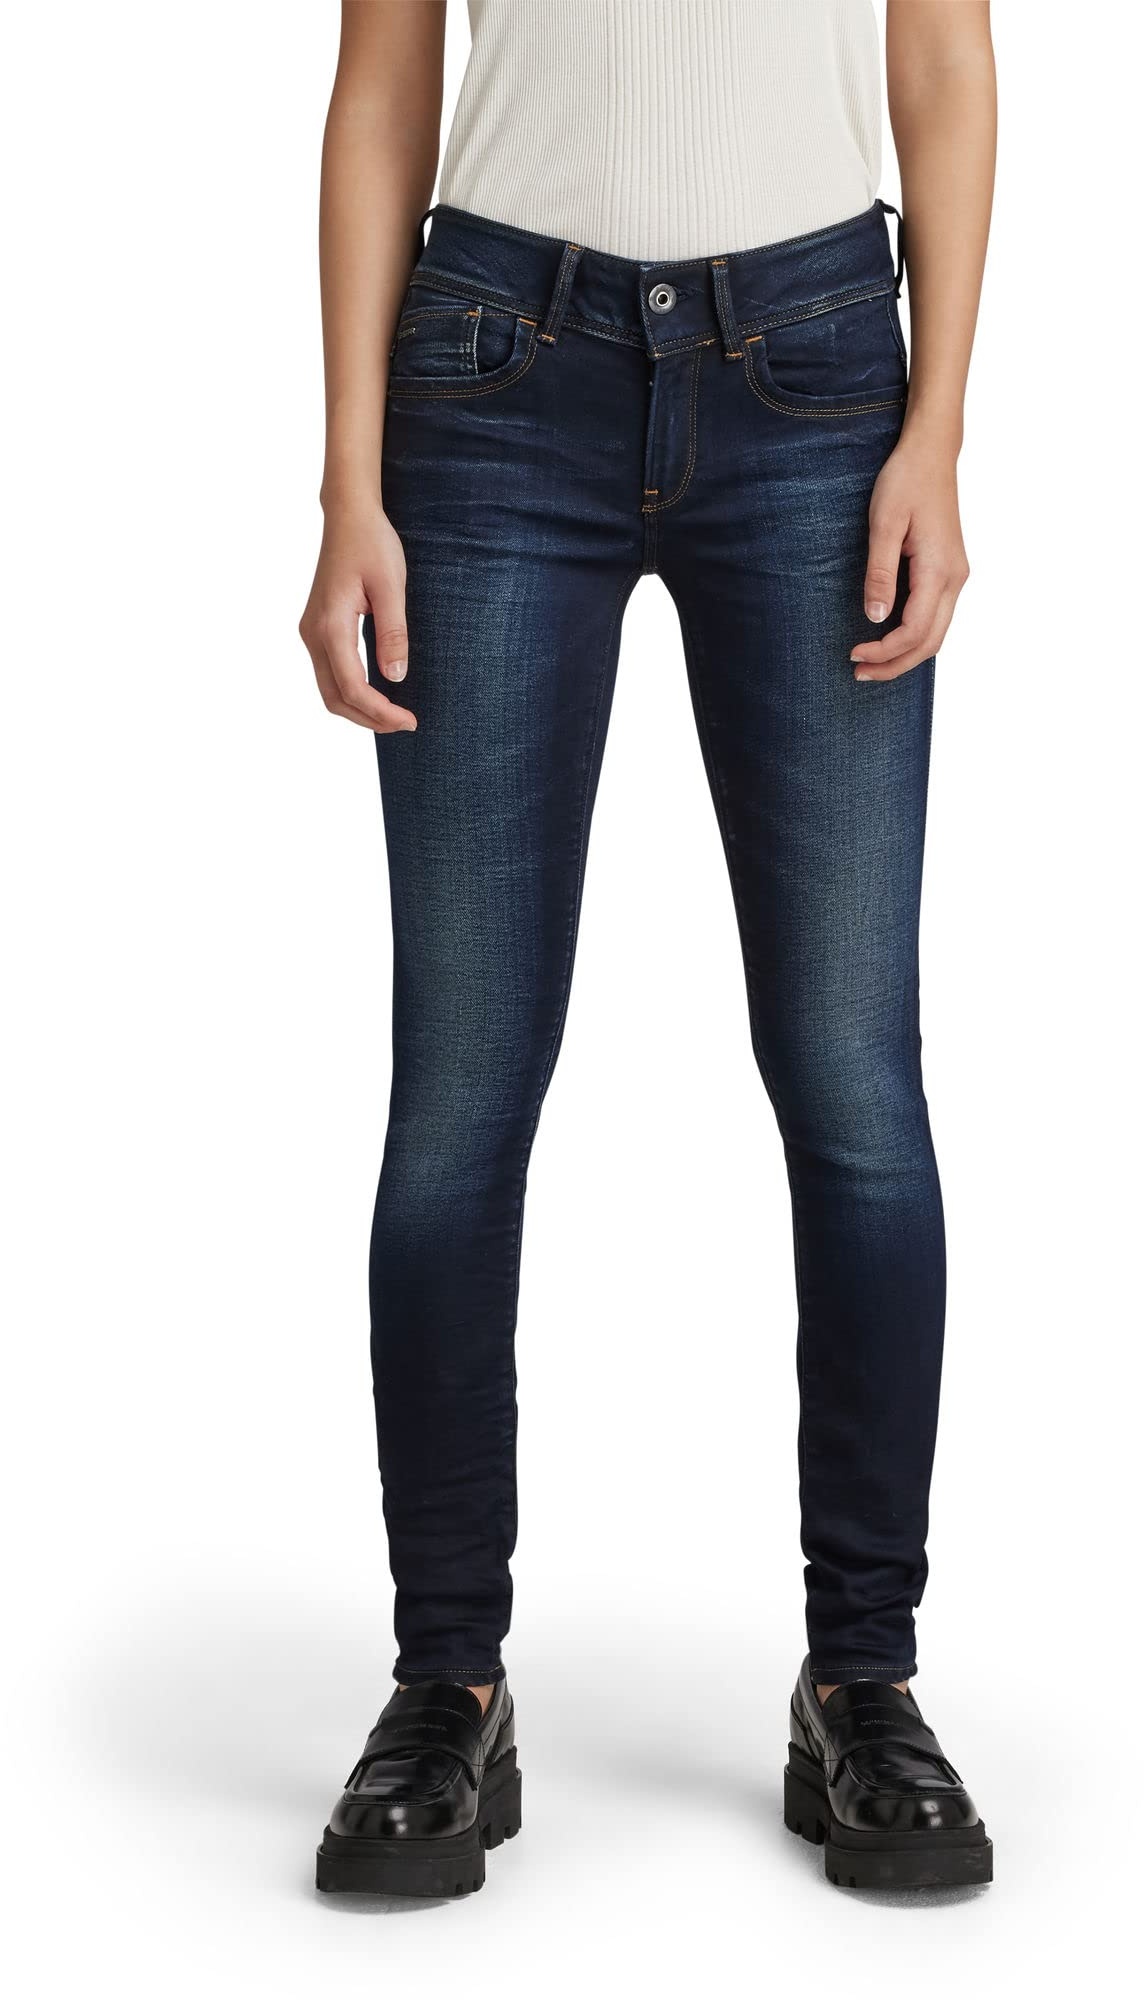 G-STAR RAW Damen Lynn Mid Waist Skinny Jeans, Blau (medium aged 60885-6131-071), 27W / 28L